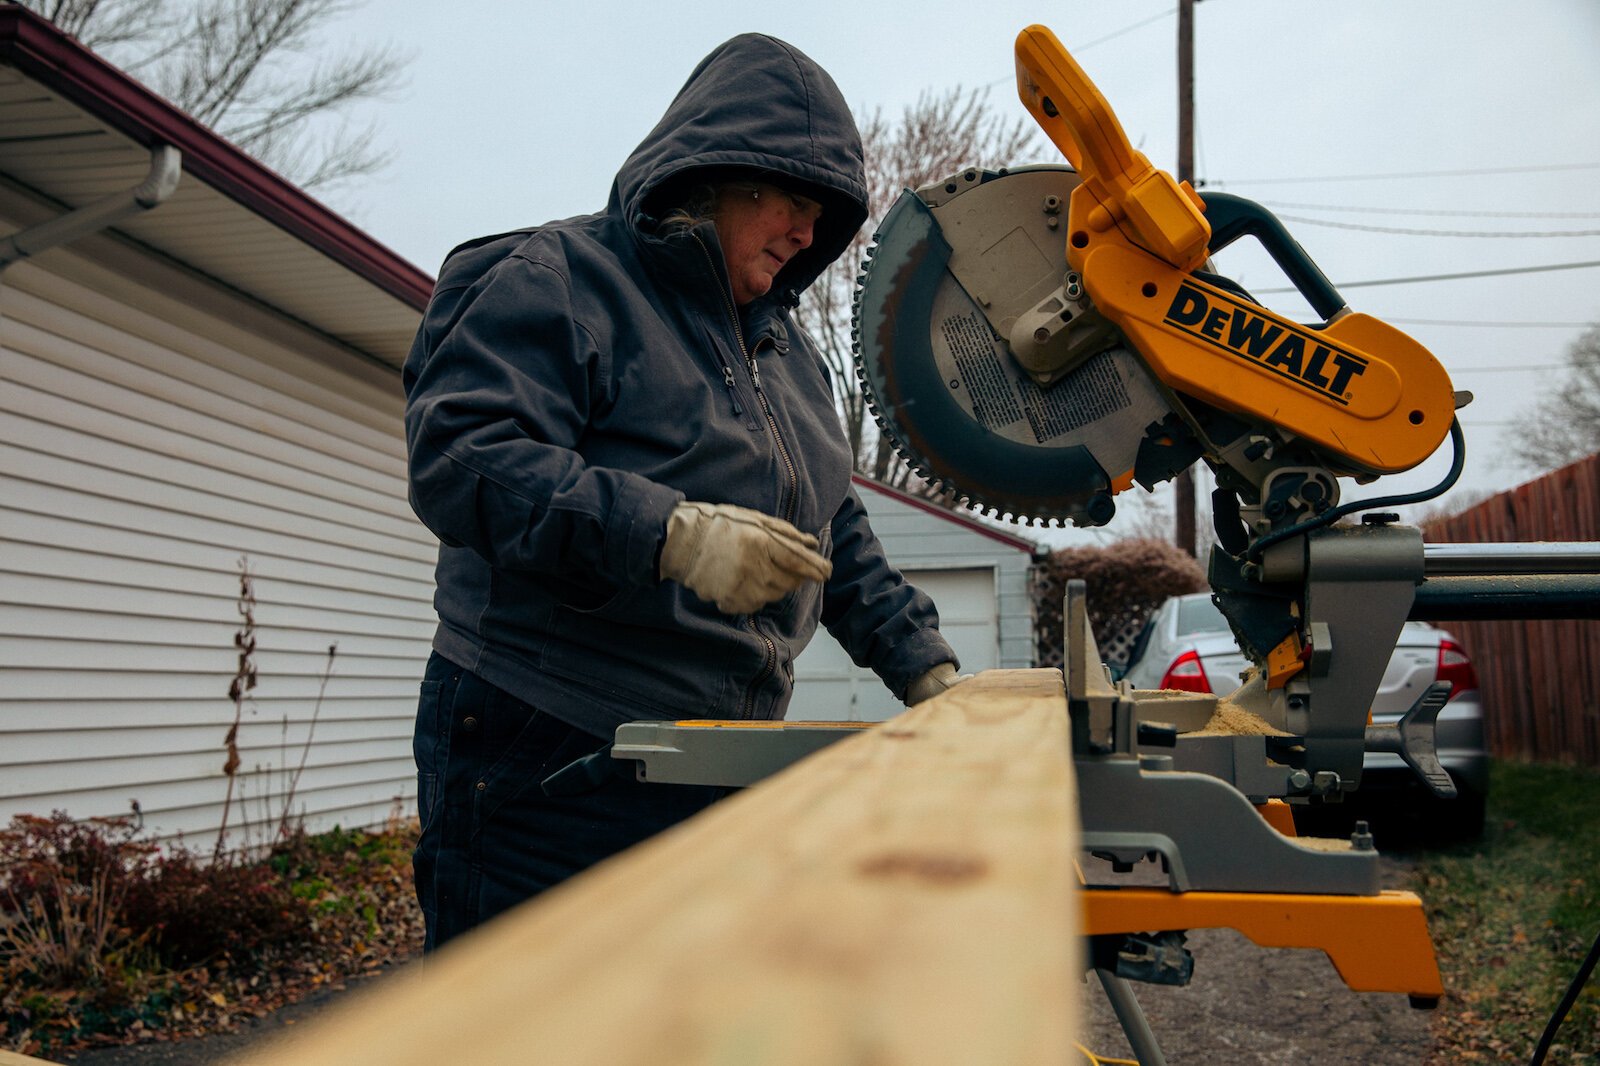 NeighborLink volunteers collaborate on service projects in Fort Wayne neighborhoods, like building ramps.